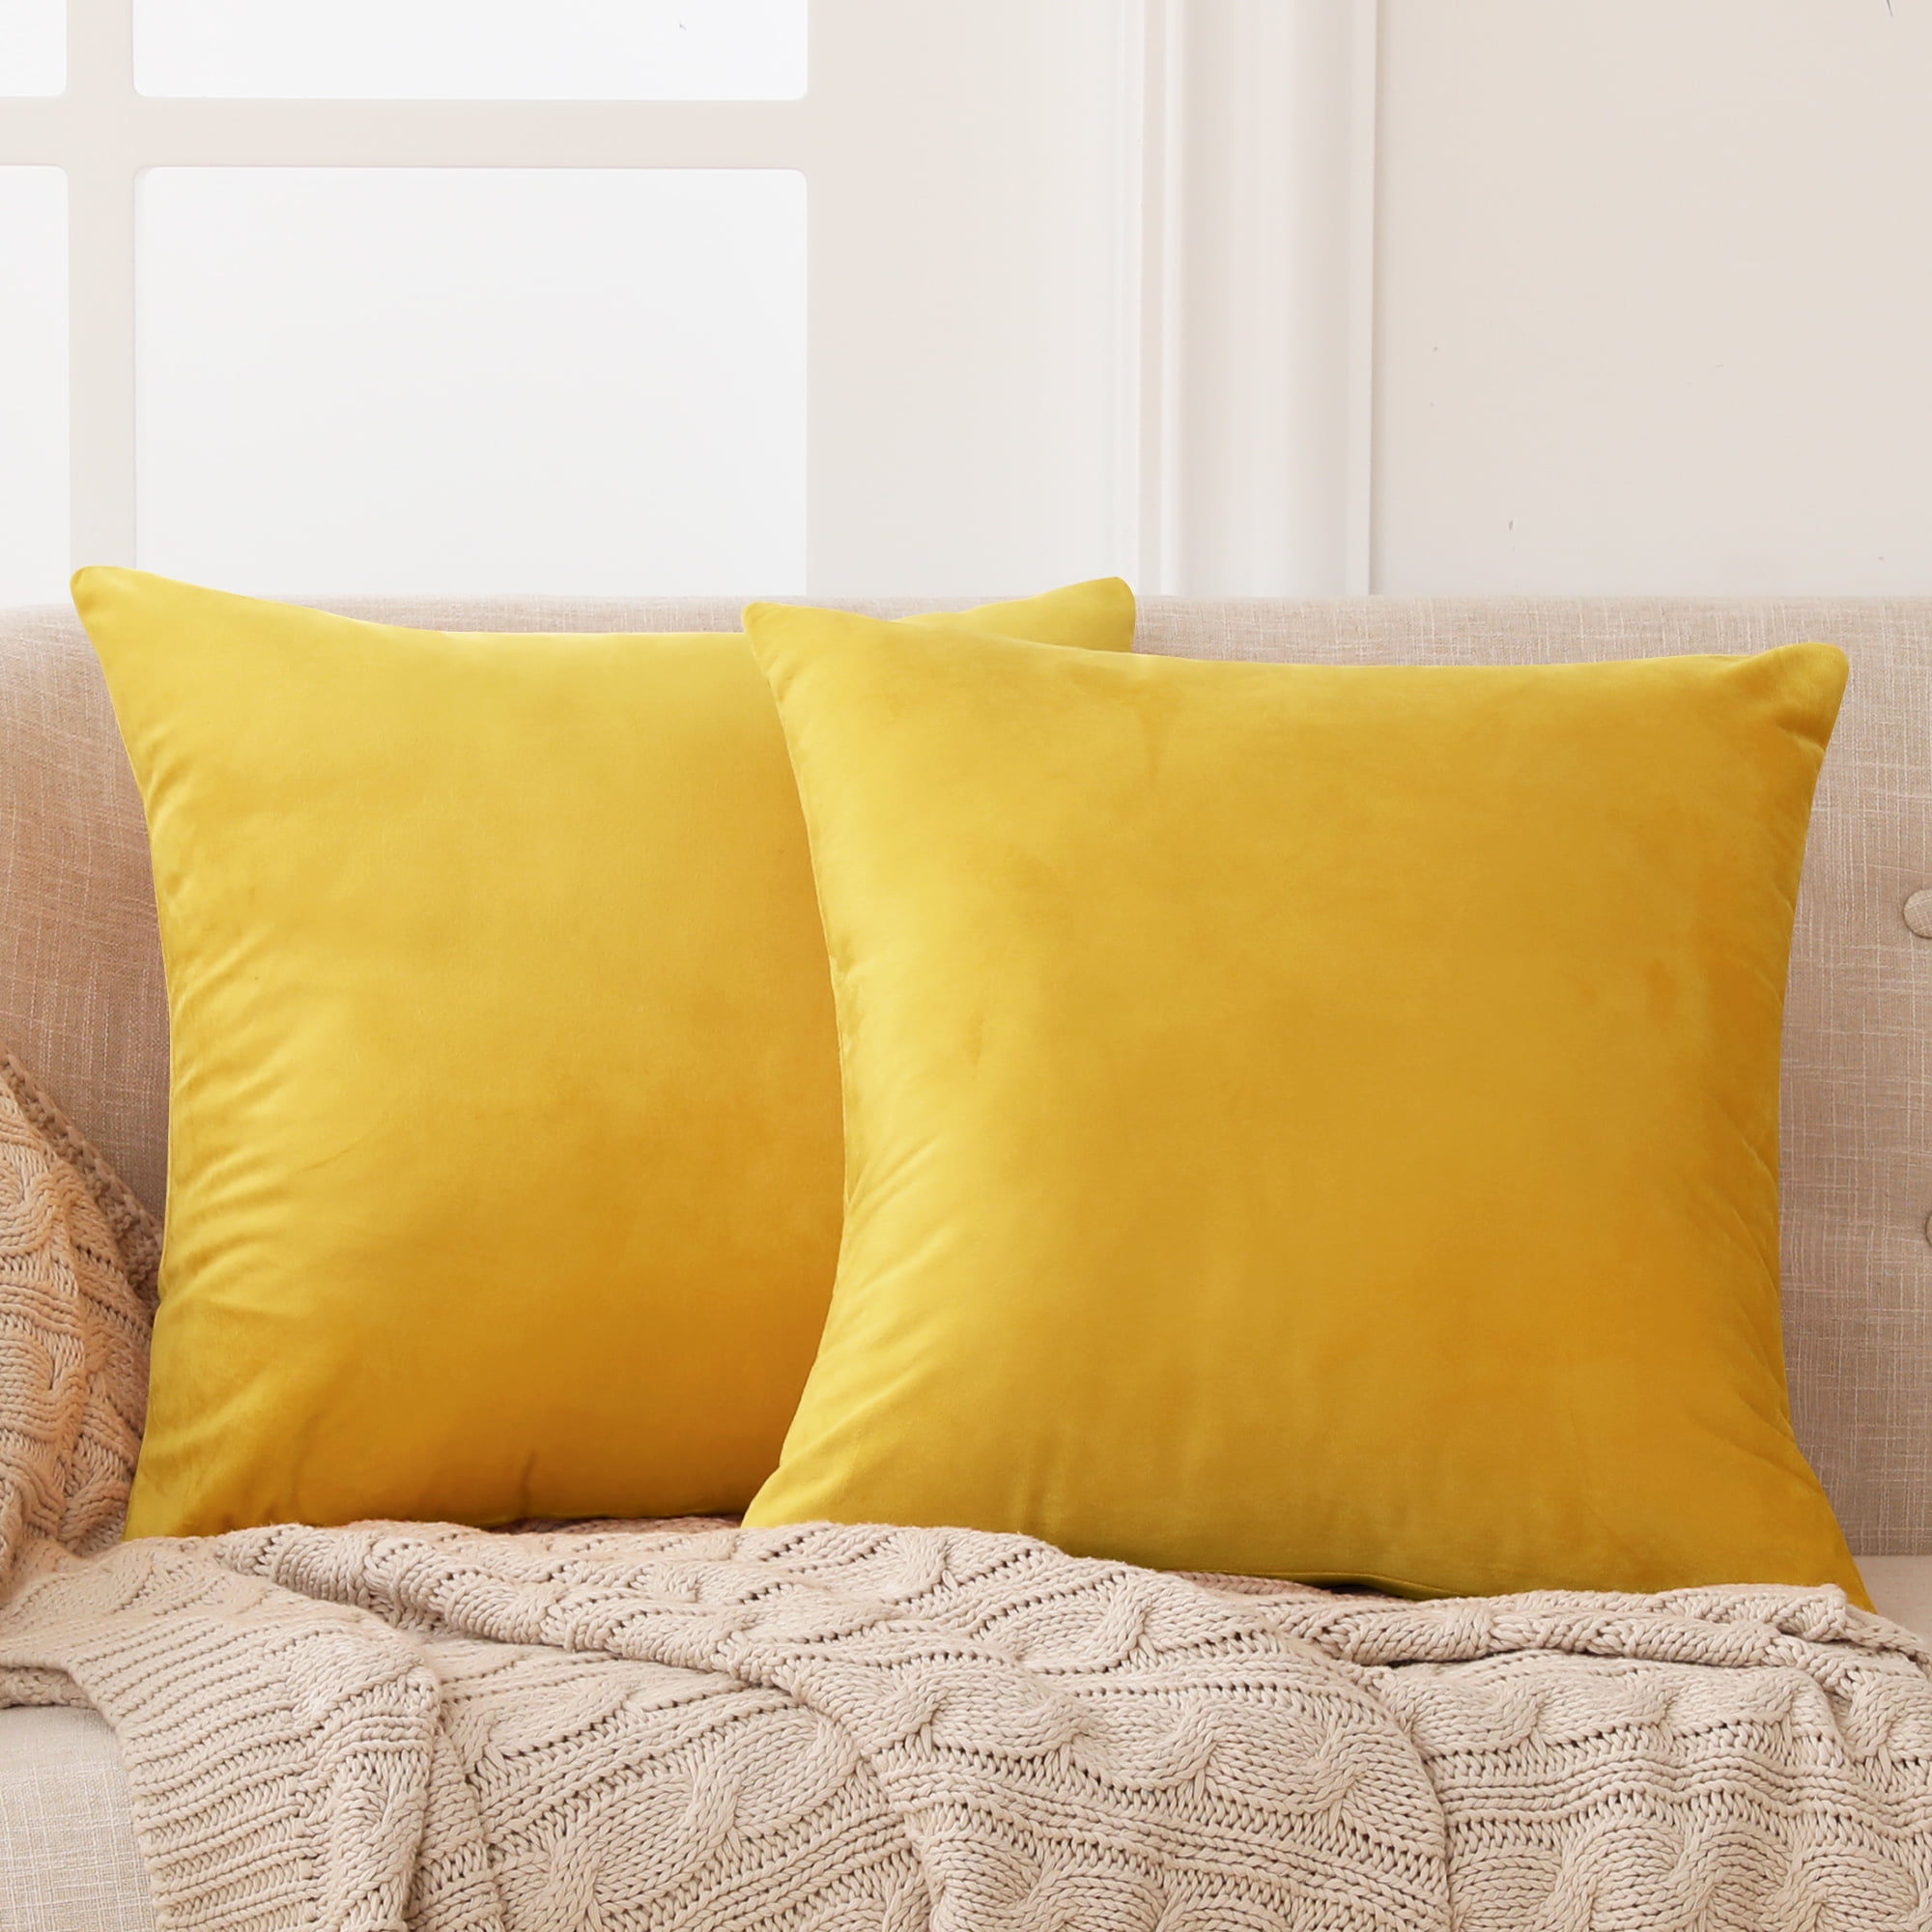 Rectangle Yellow Pillow Cases Sofa Car Waist Throw Cushion Cover Home Decor Gift